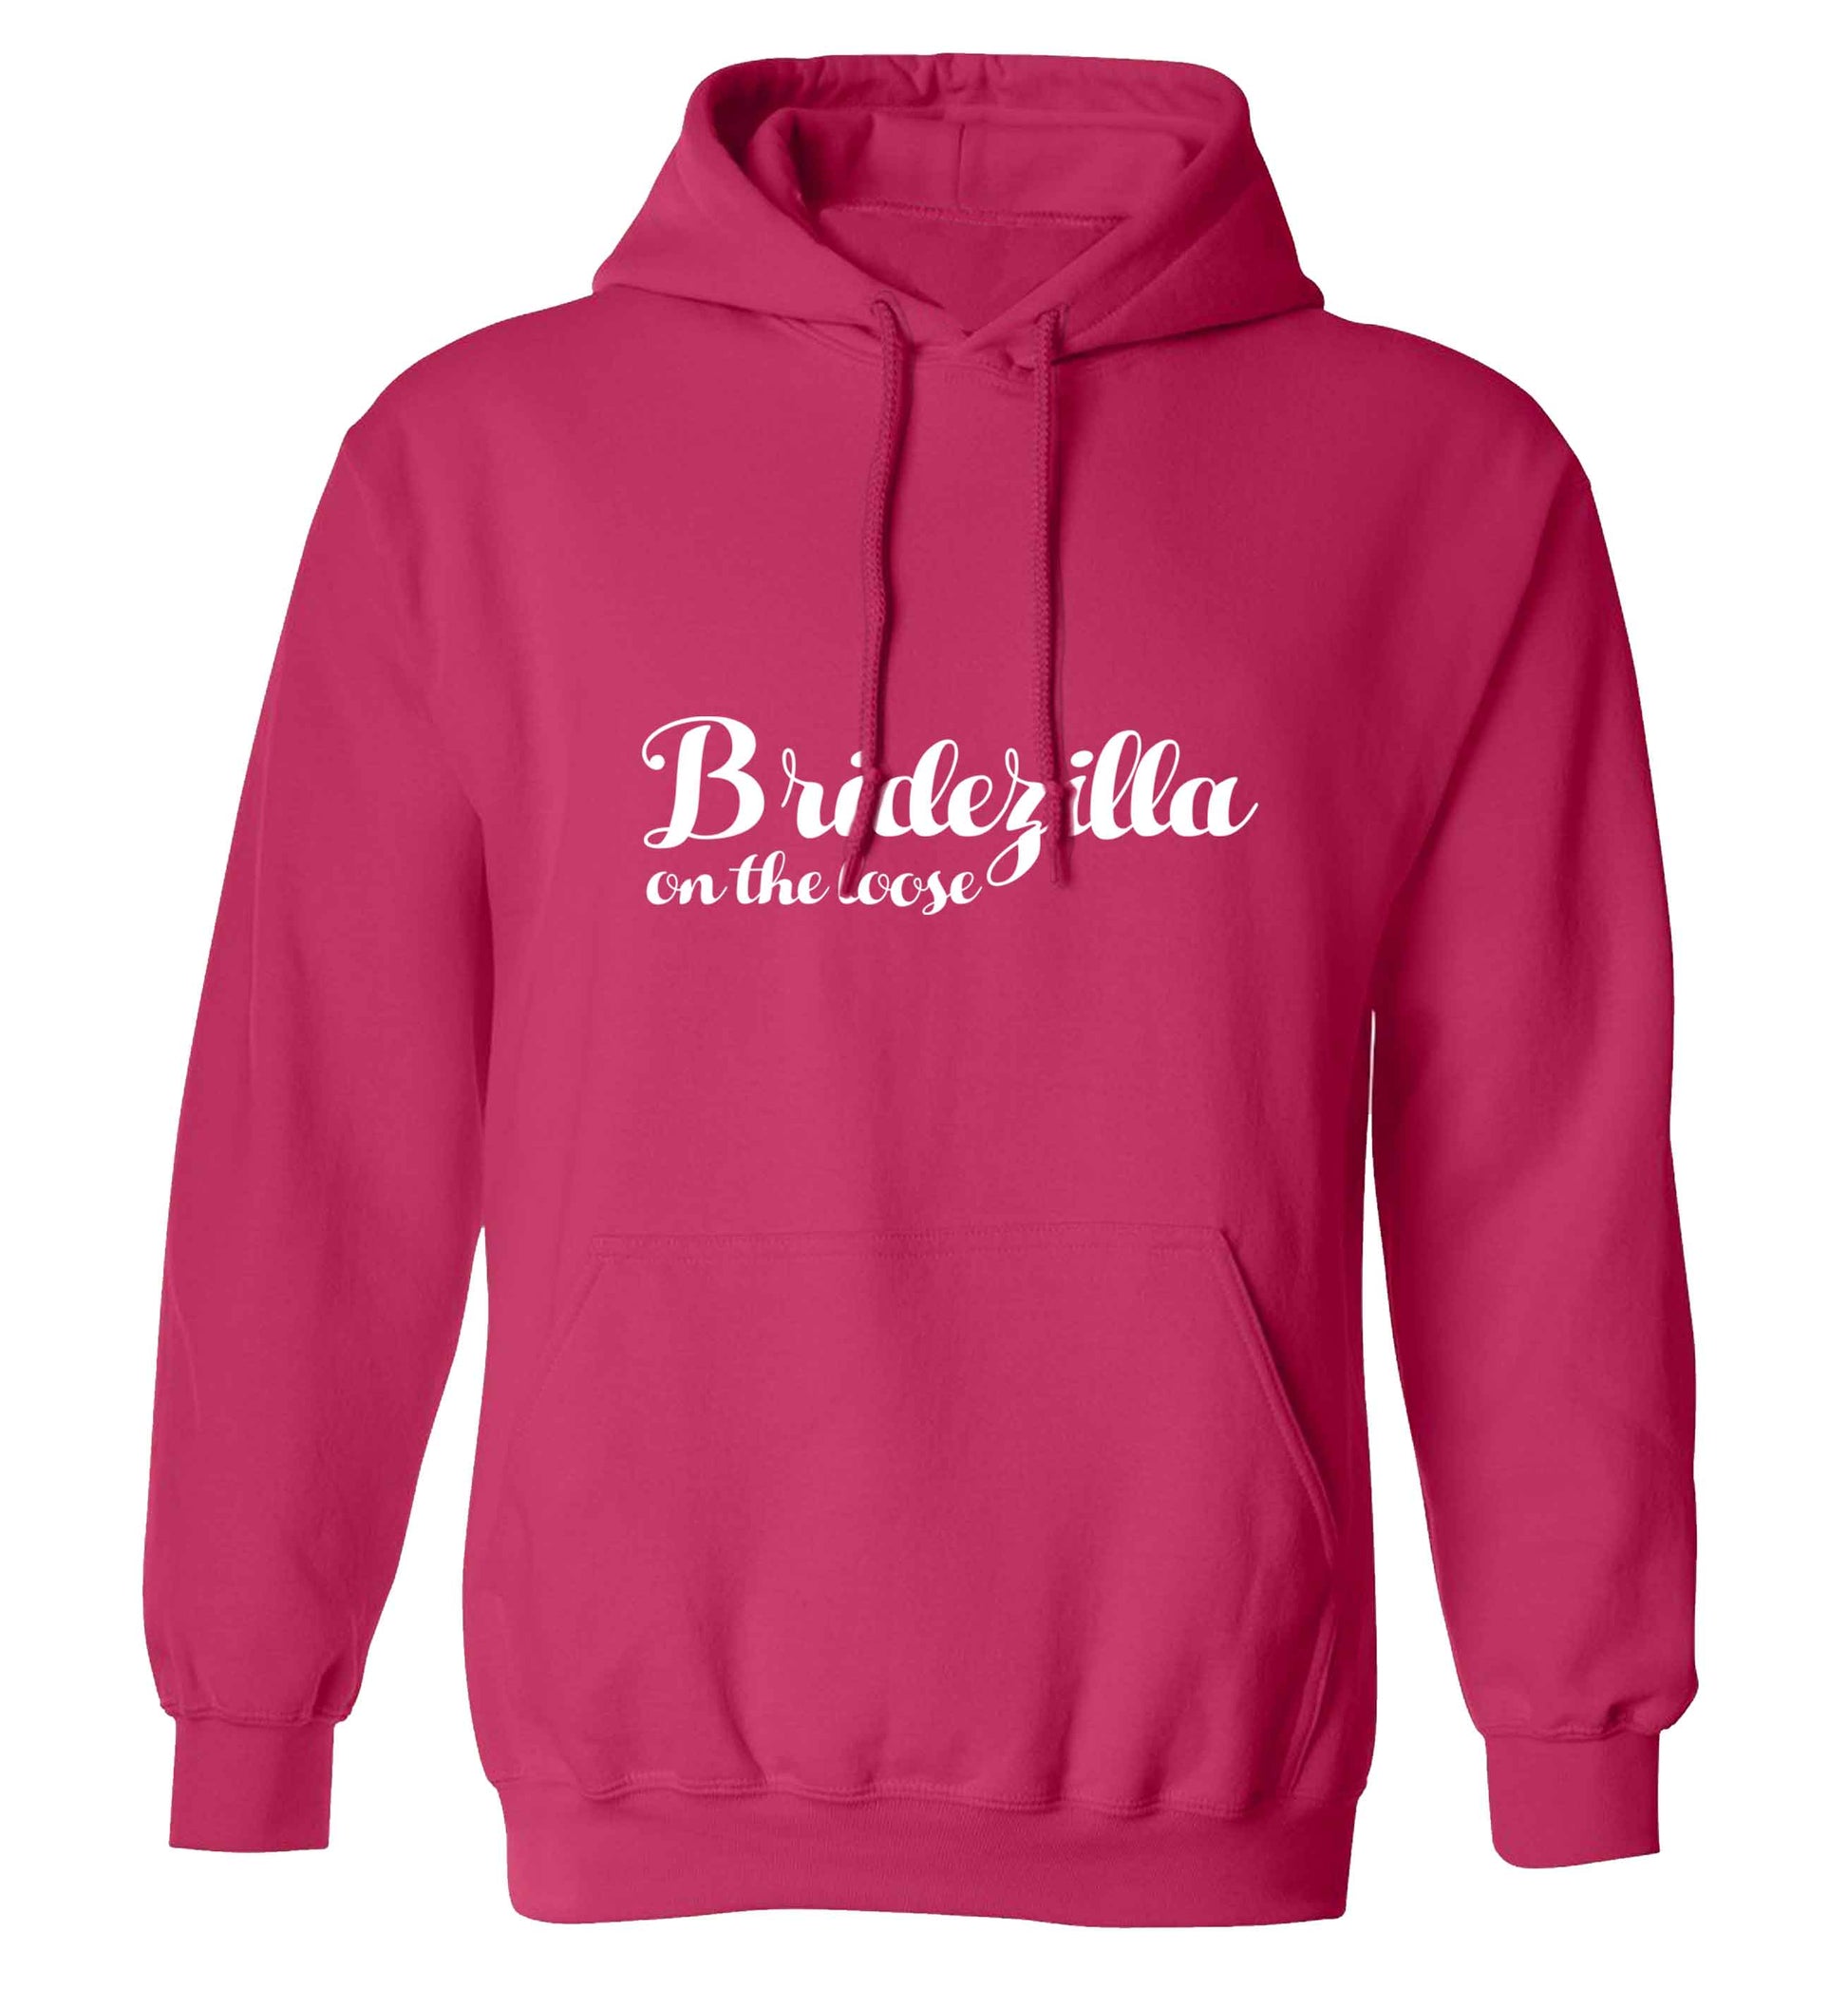 Bridezilla on the loose adults unisex pink hoodie 2XL